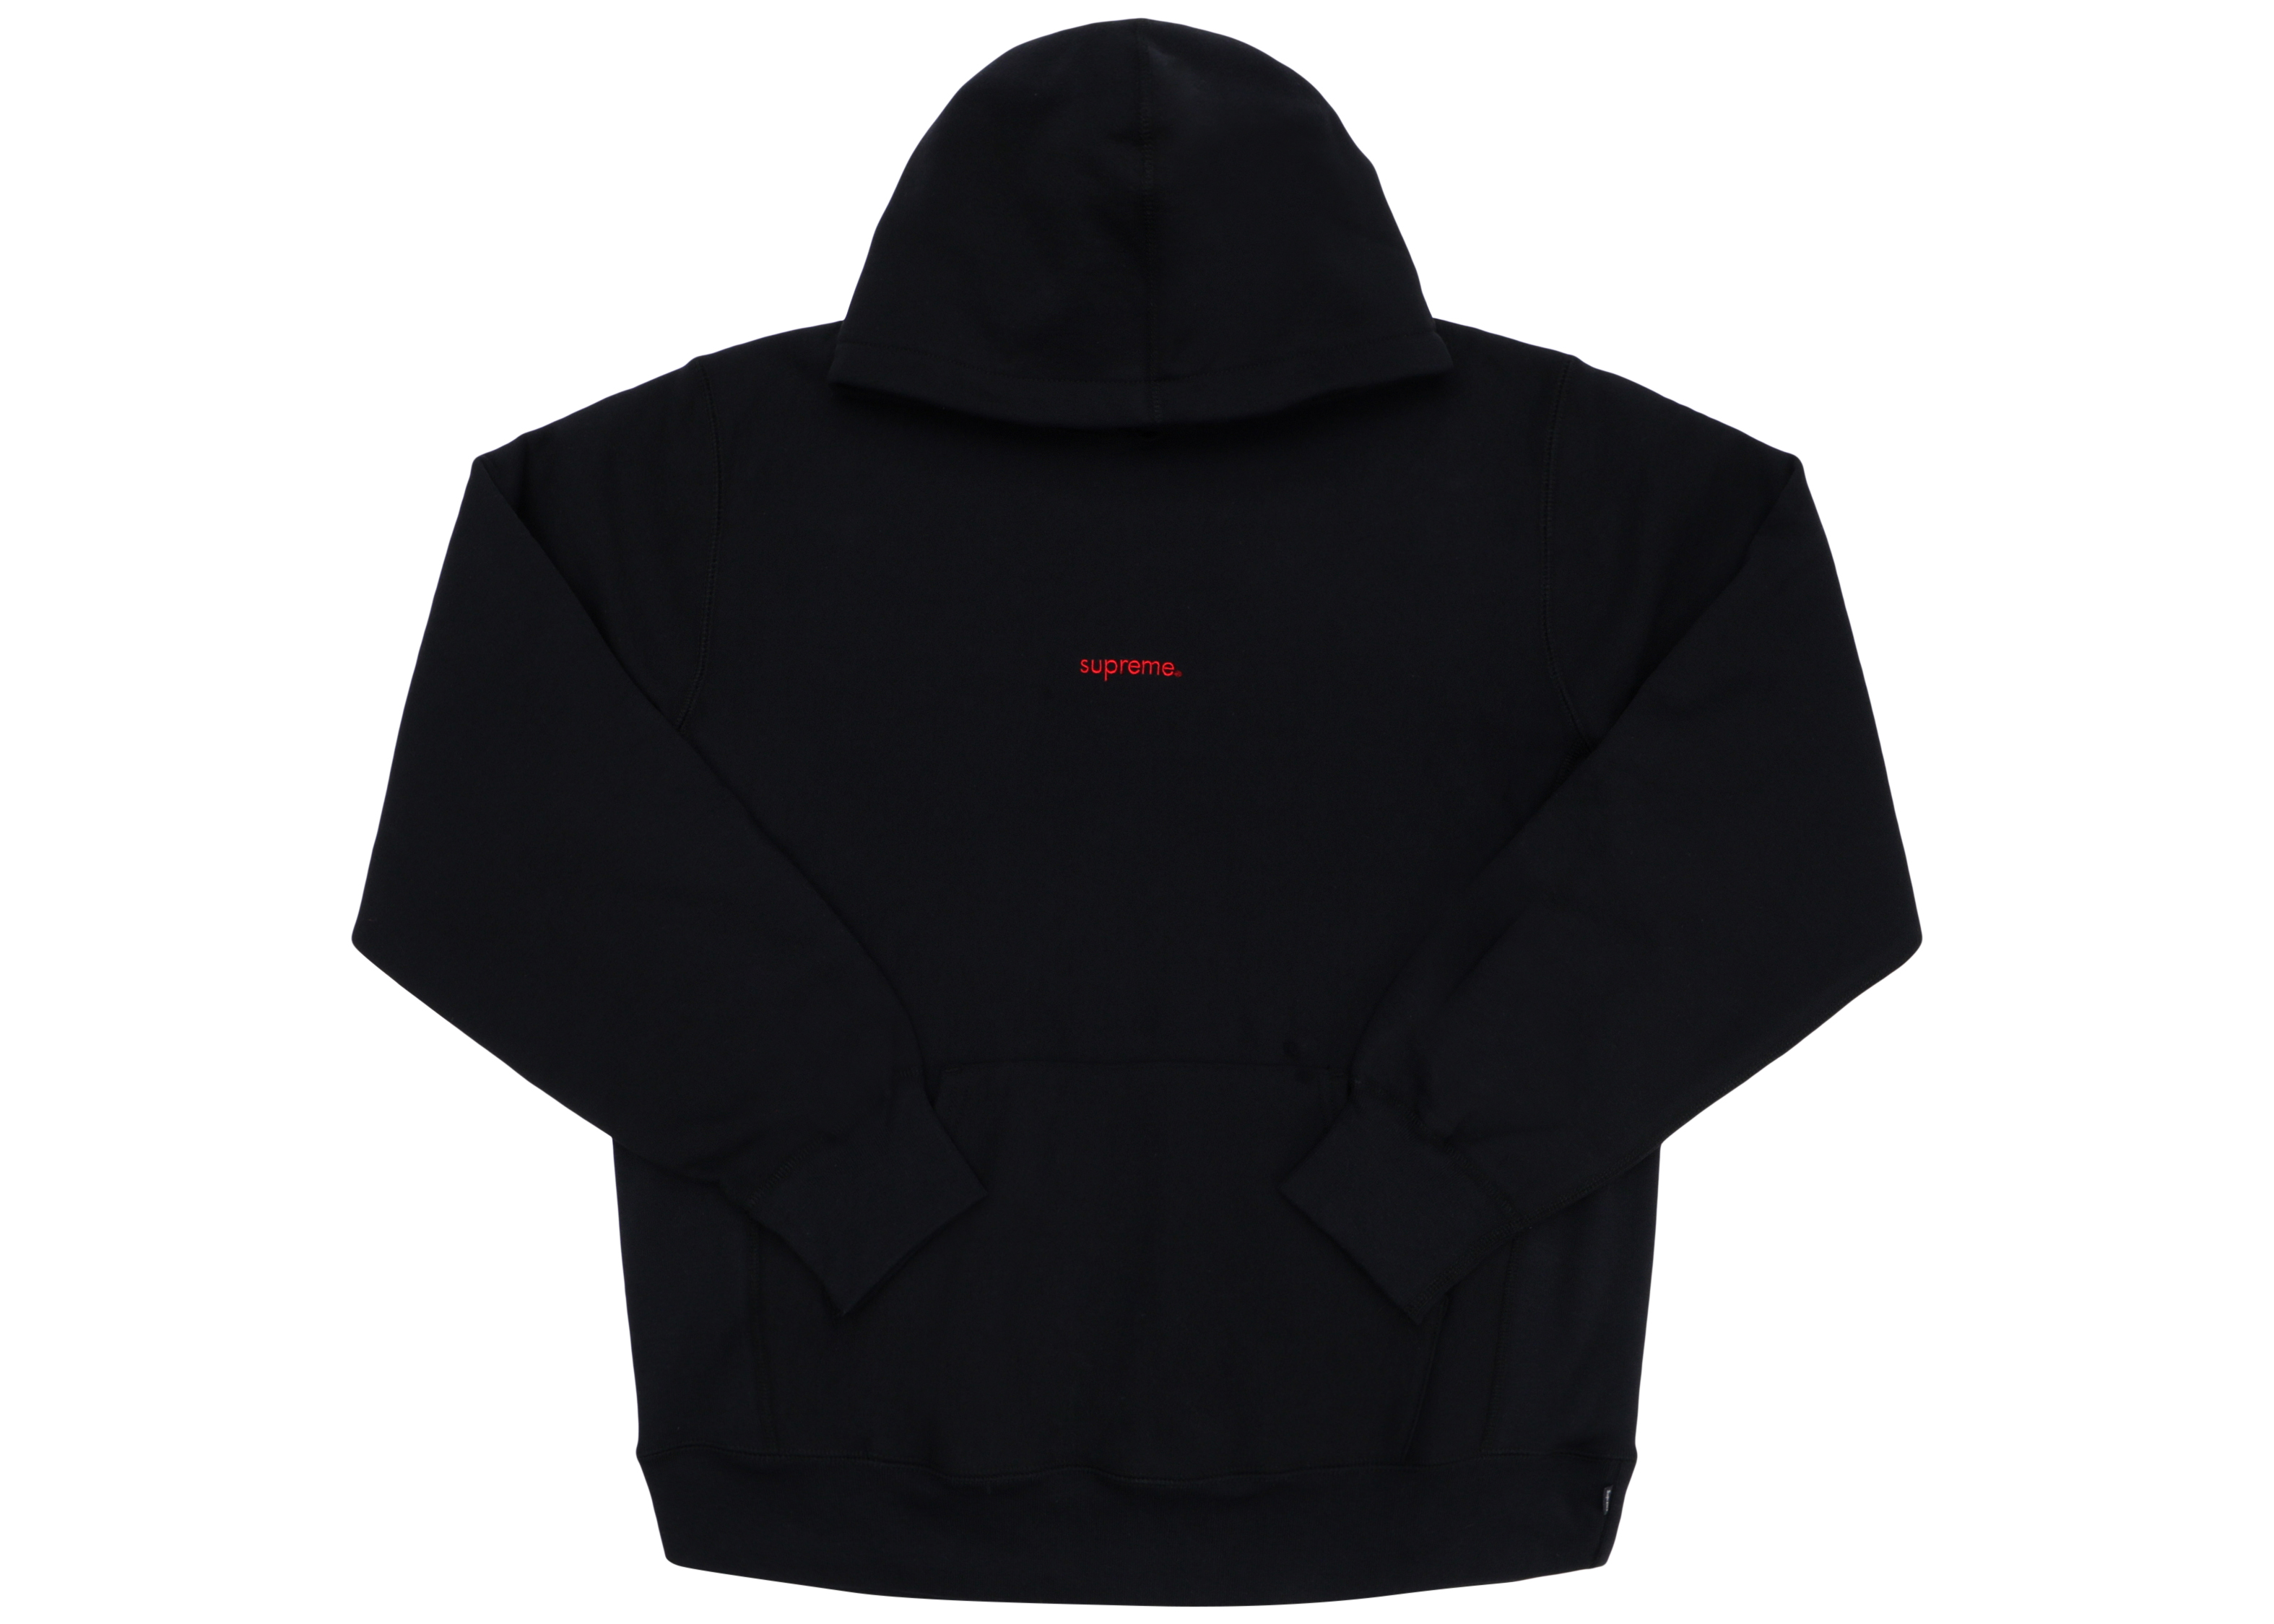 Supreme Trademark Hooded Sweatshirt Black Men's - FW18 - GB